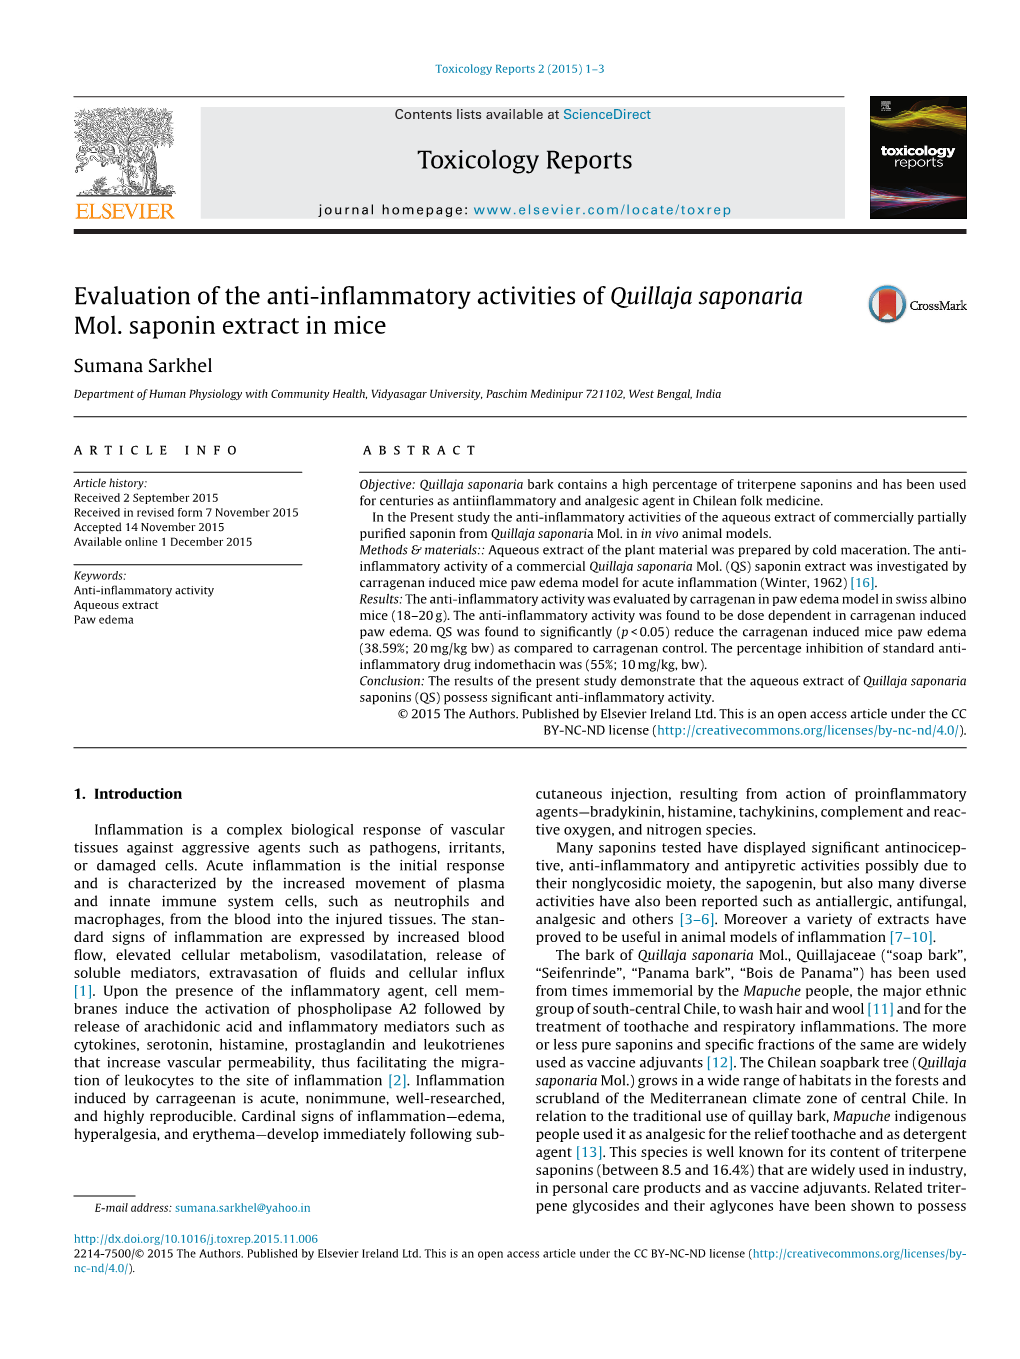 Evaluation of the Anti-Inflammatory Activities of Quillaja Saponaria Mol